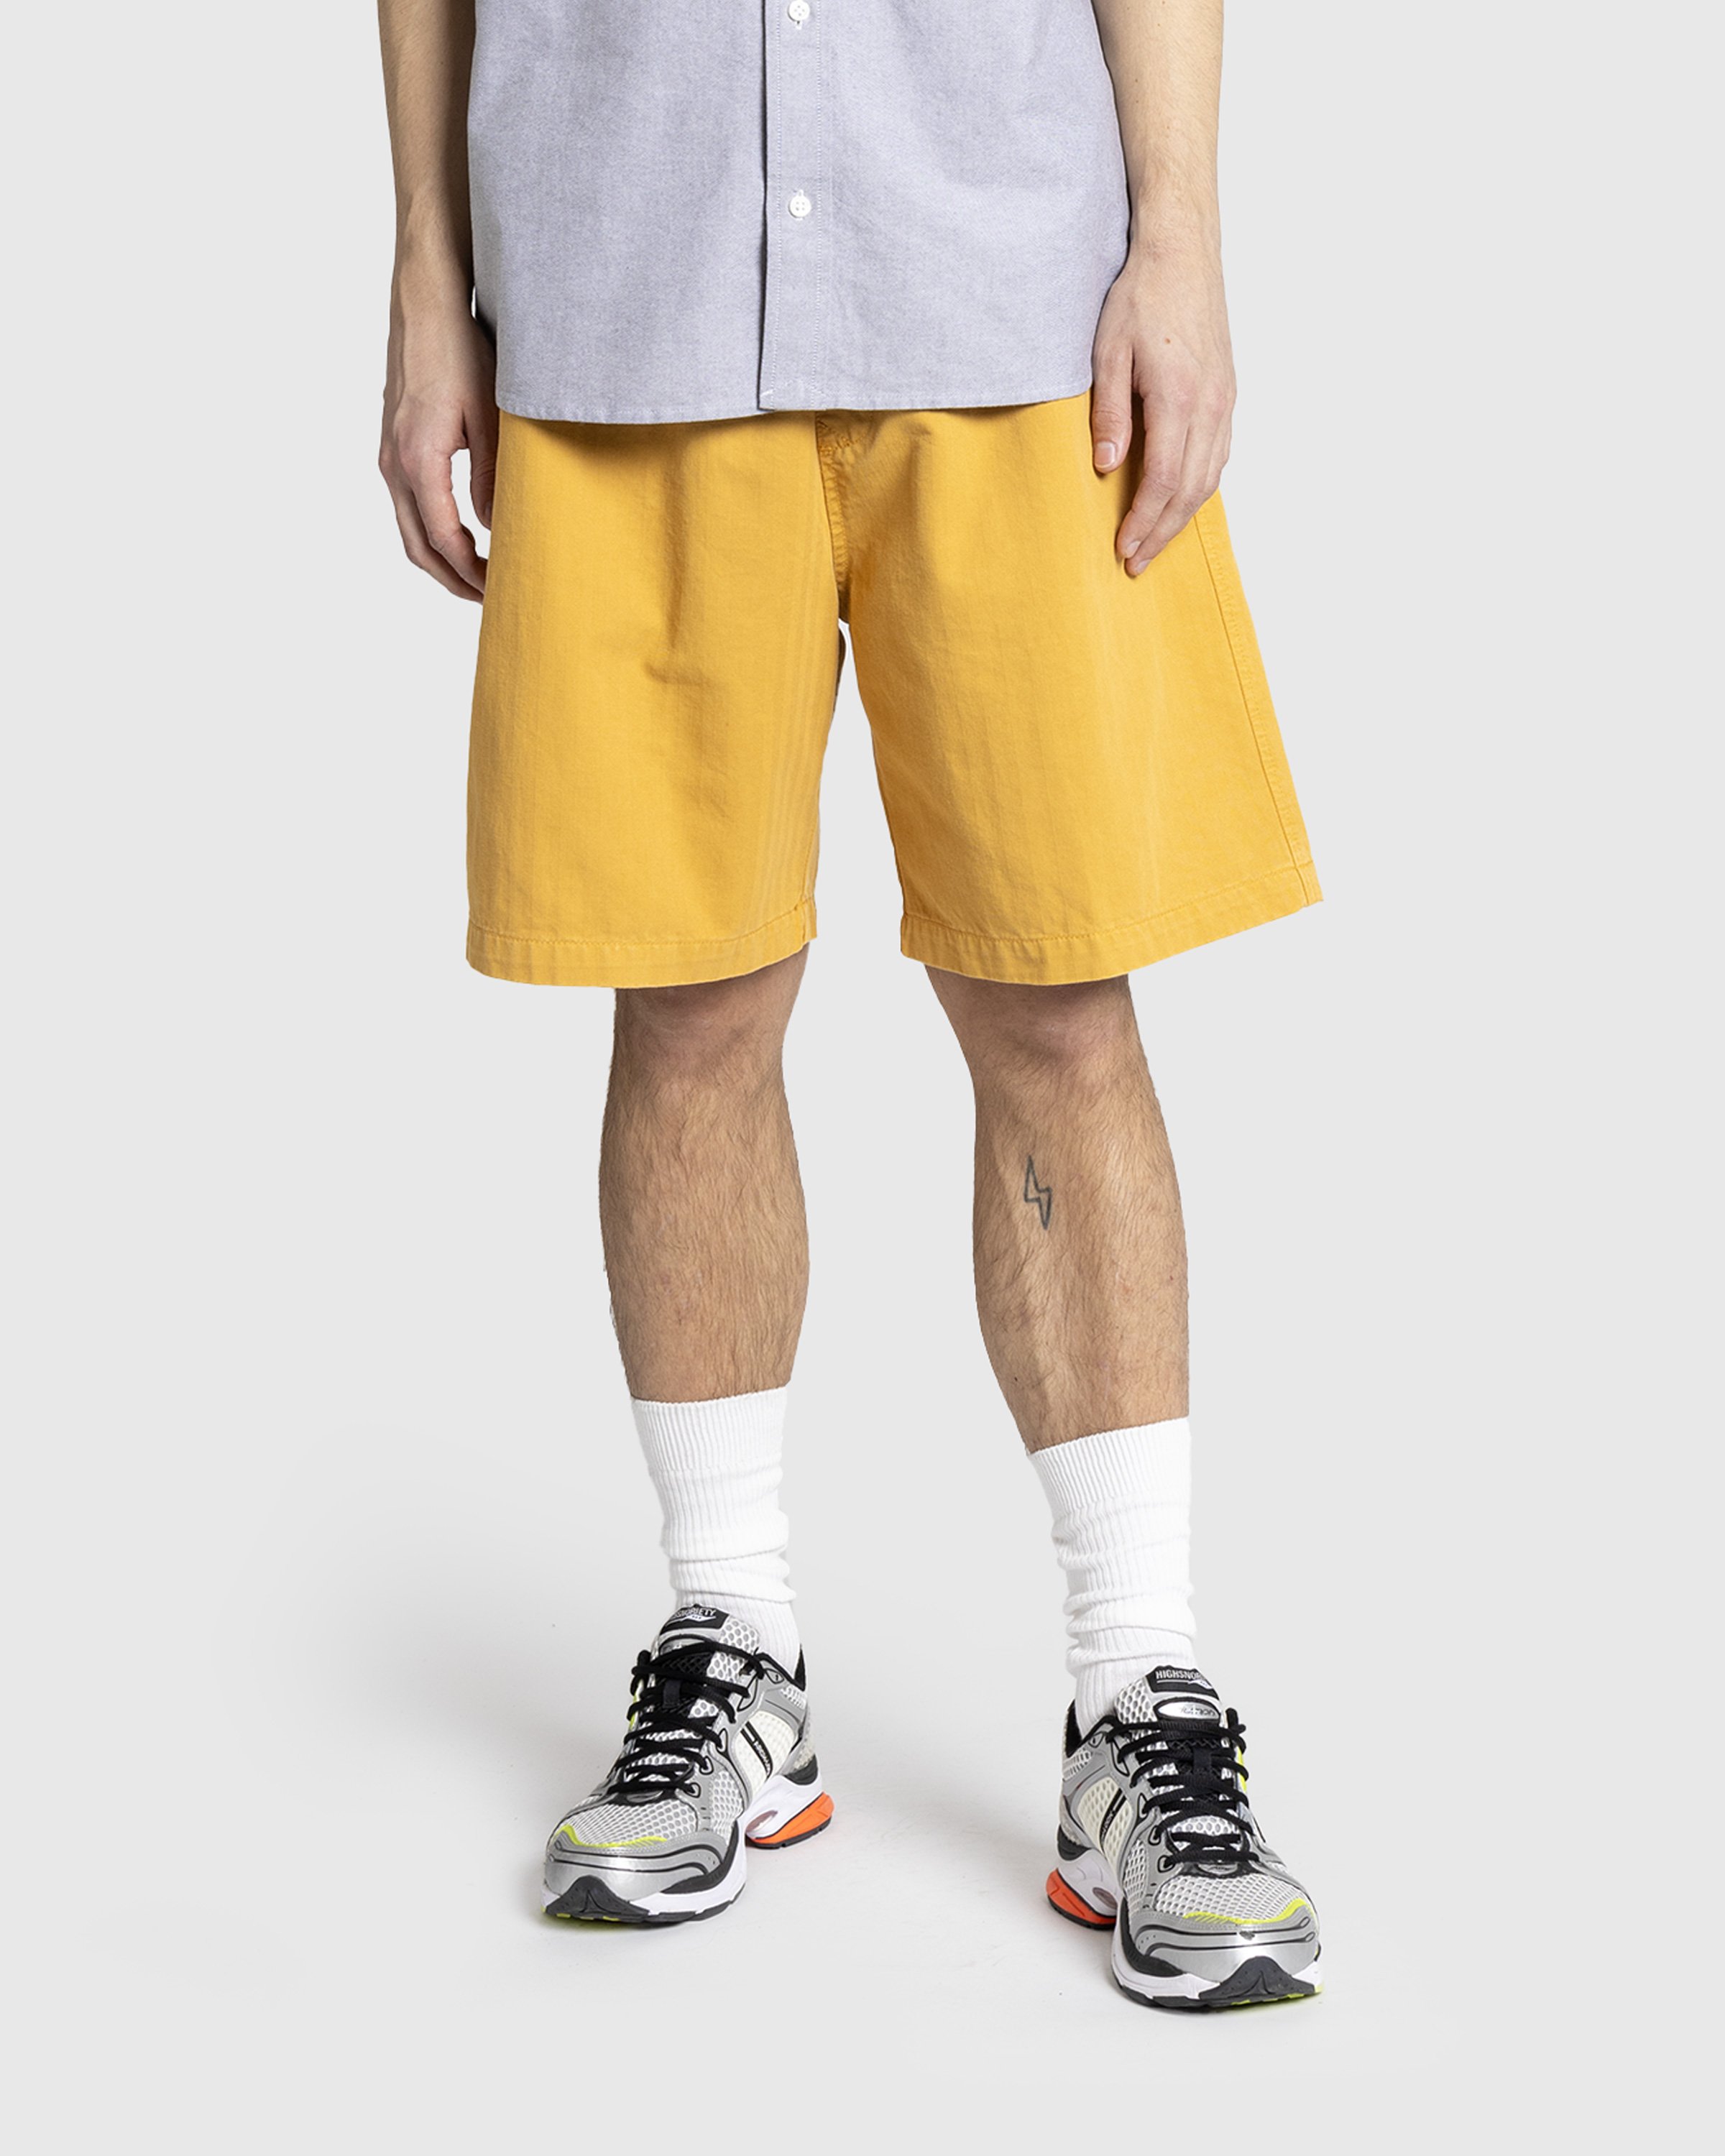 Carhartt WIP - Rainer Short Sunray /garment dyed - Clothing - Yellow - Image 2